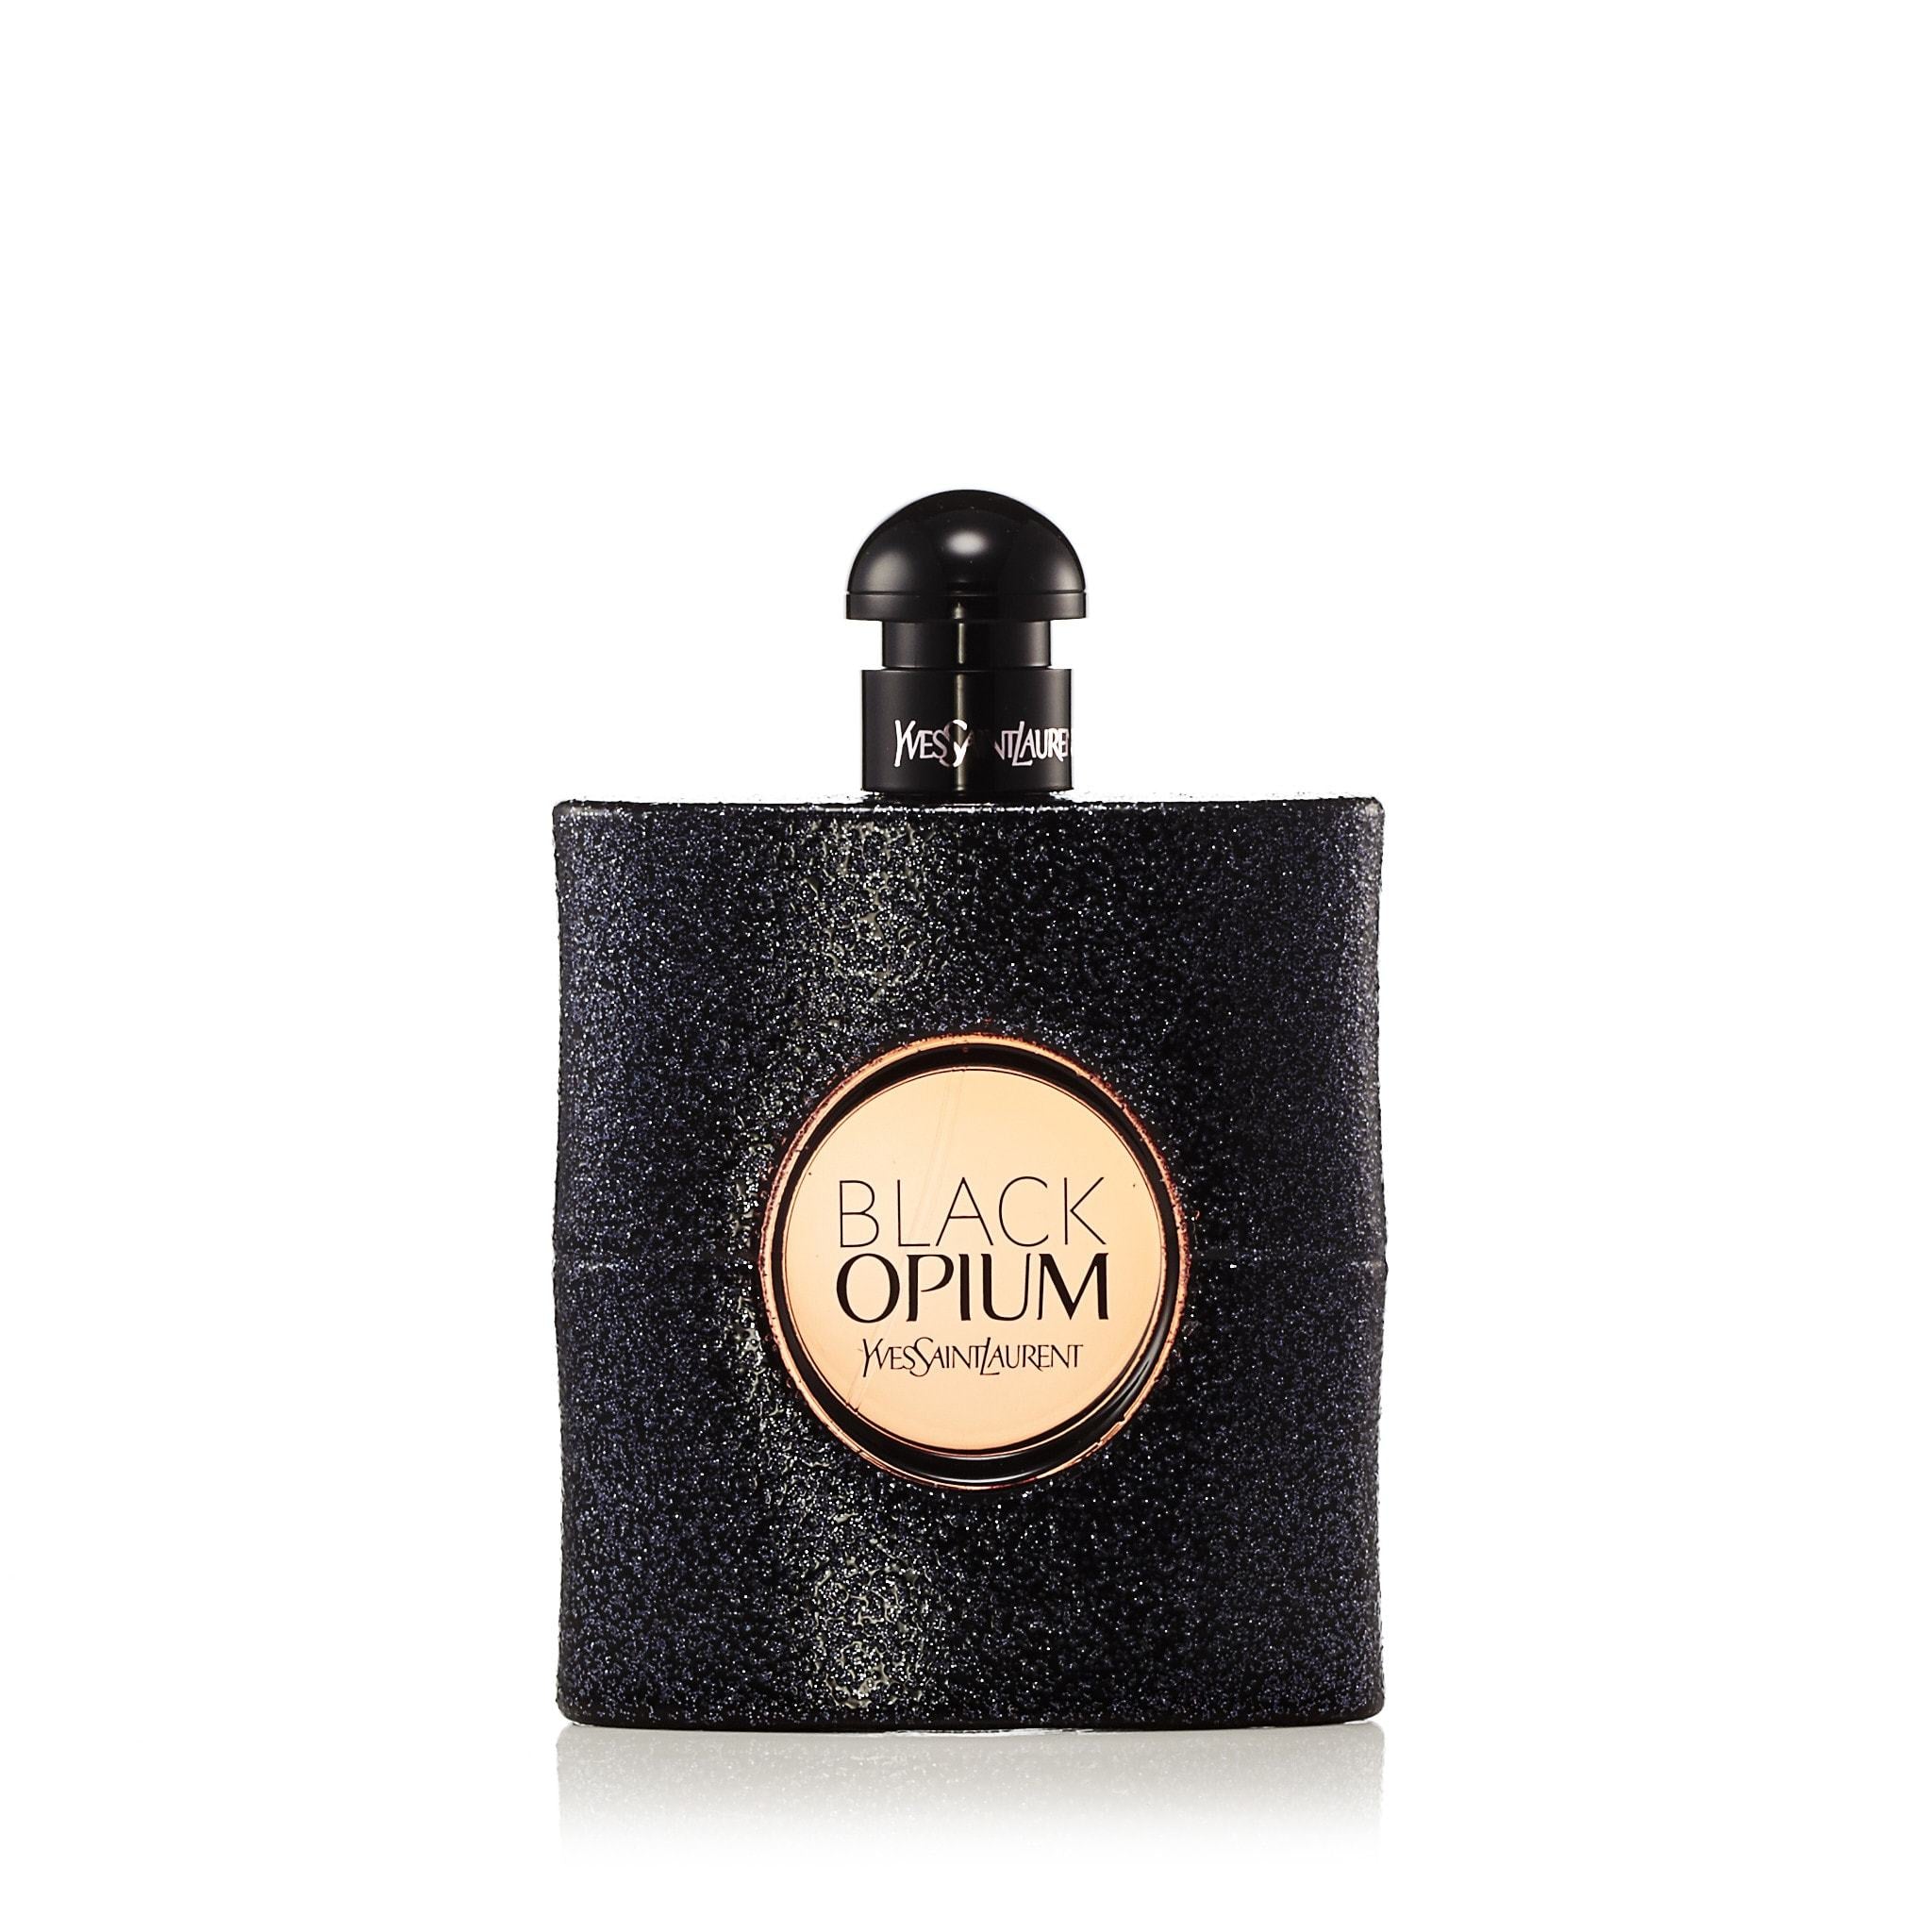 Black Opium Intense by Yves Saint Laurent Eau de Parfum Spray 3 oz and A Mystery Name Brand Sample vile